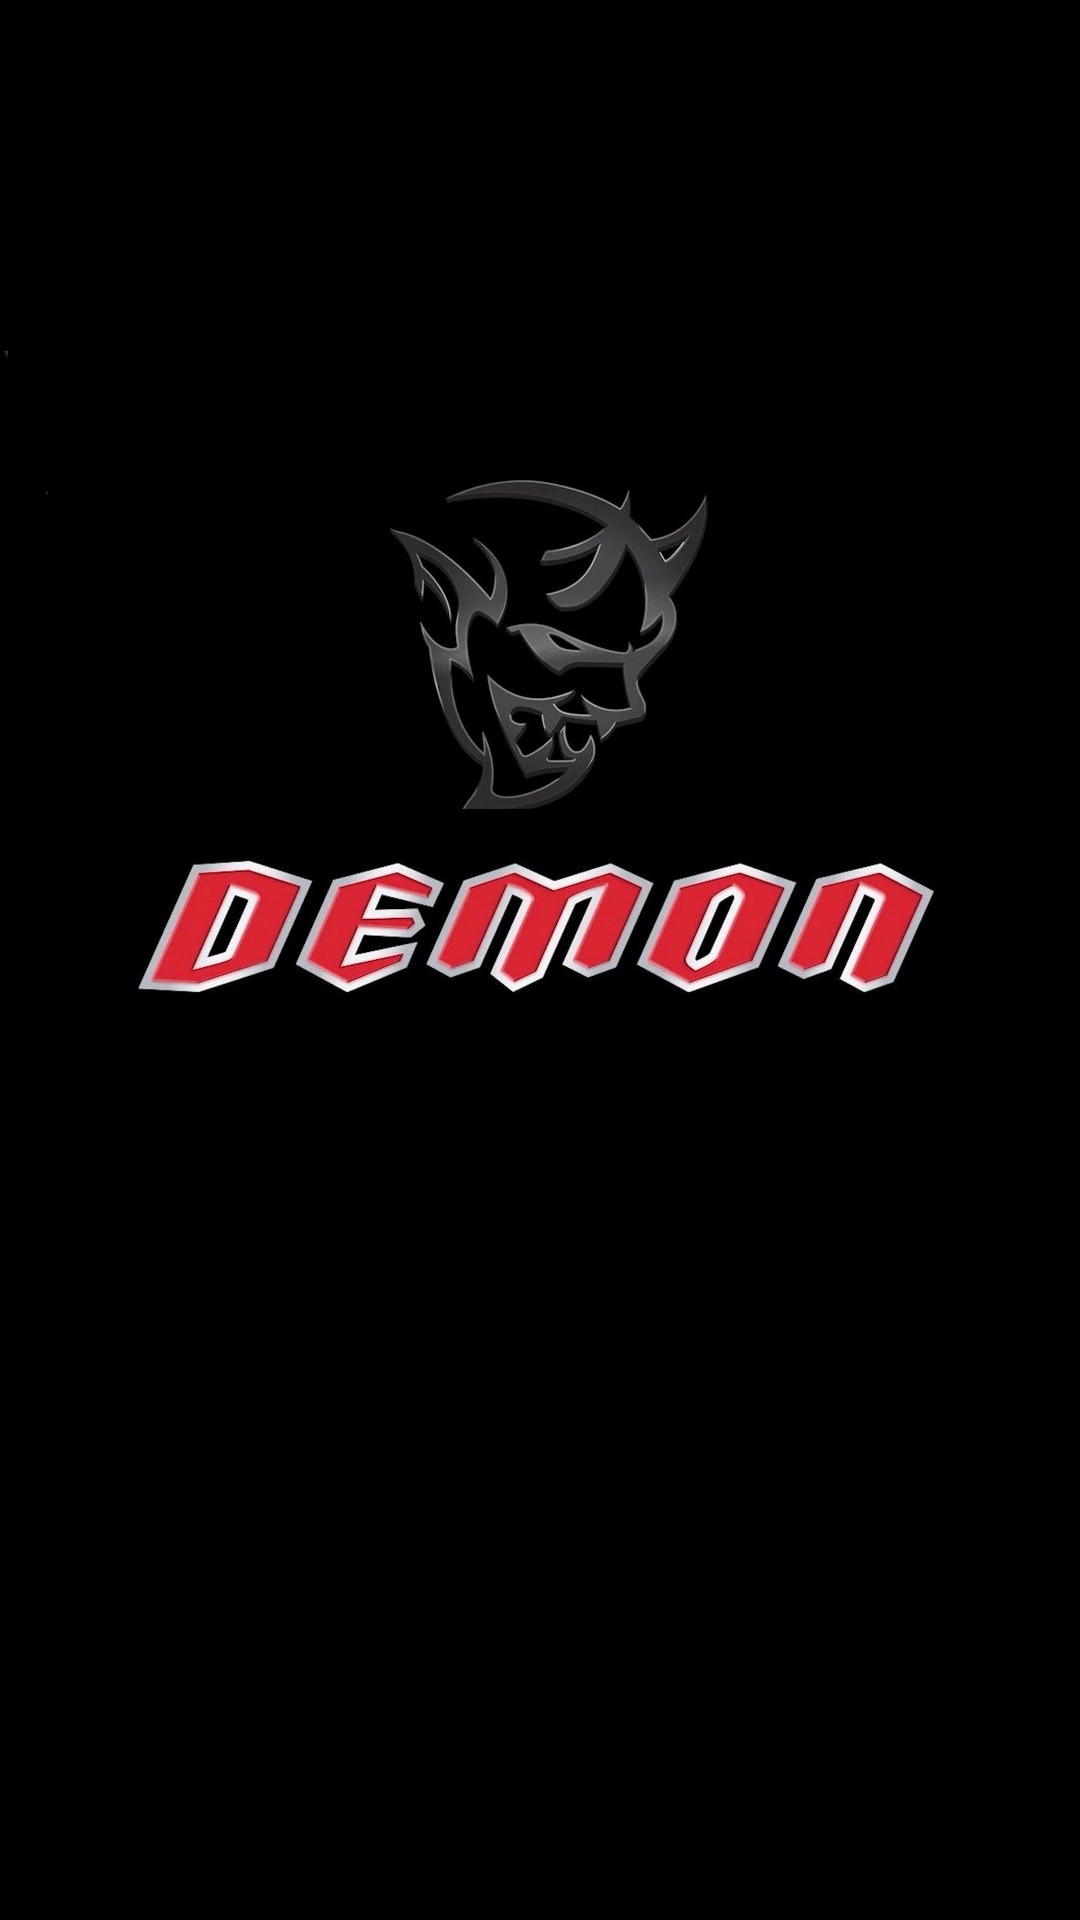 Dodge Demon Logo iPhone Wallpaper resolution 1080x1920